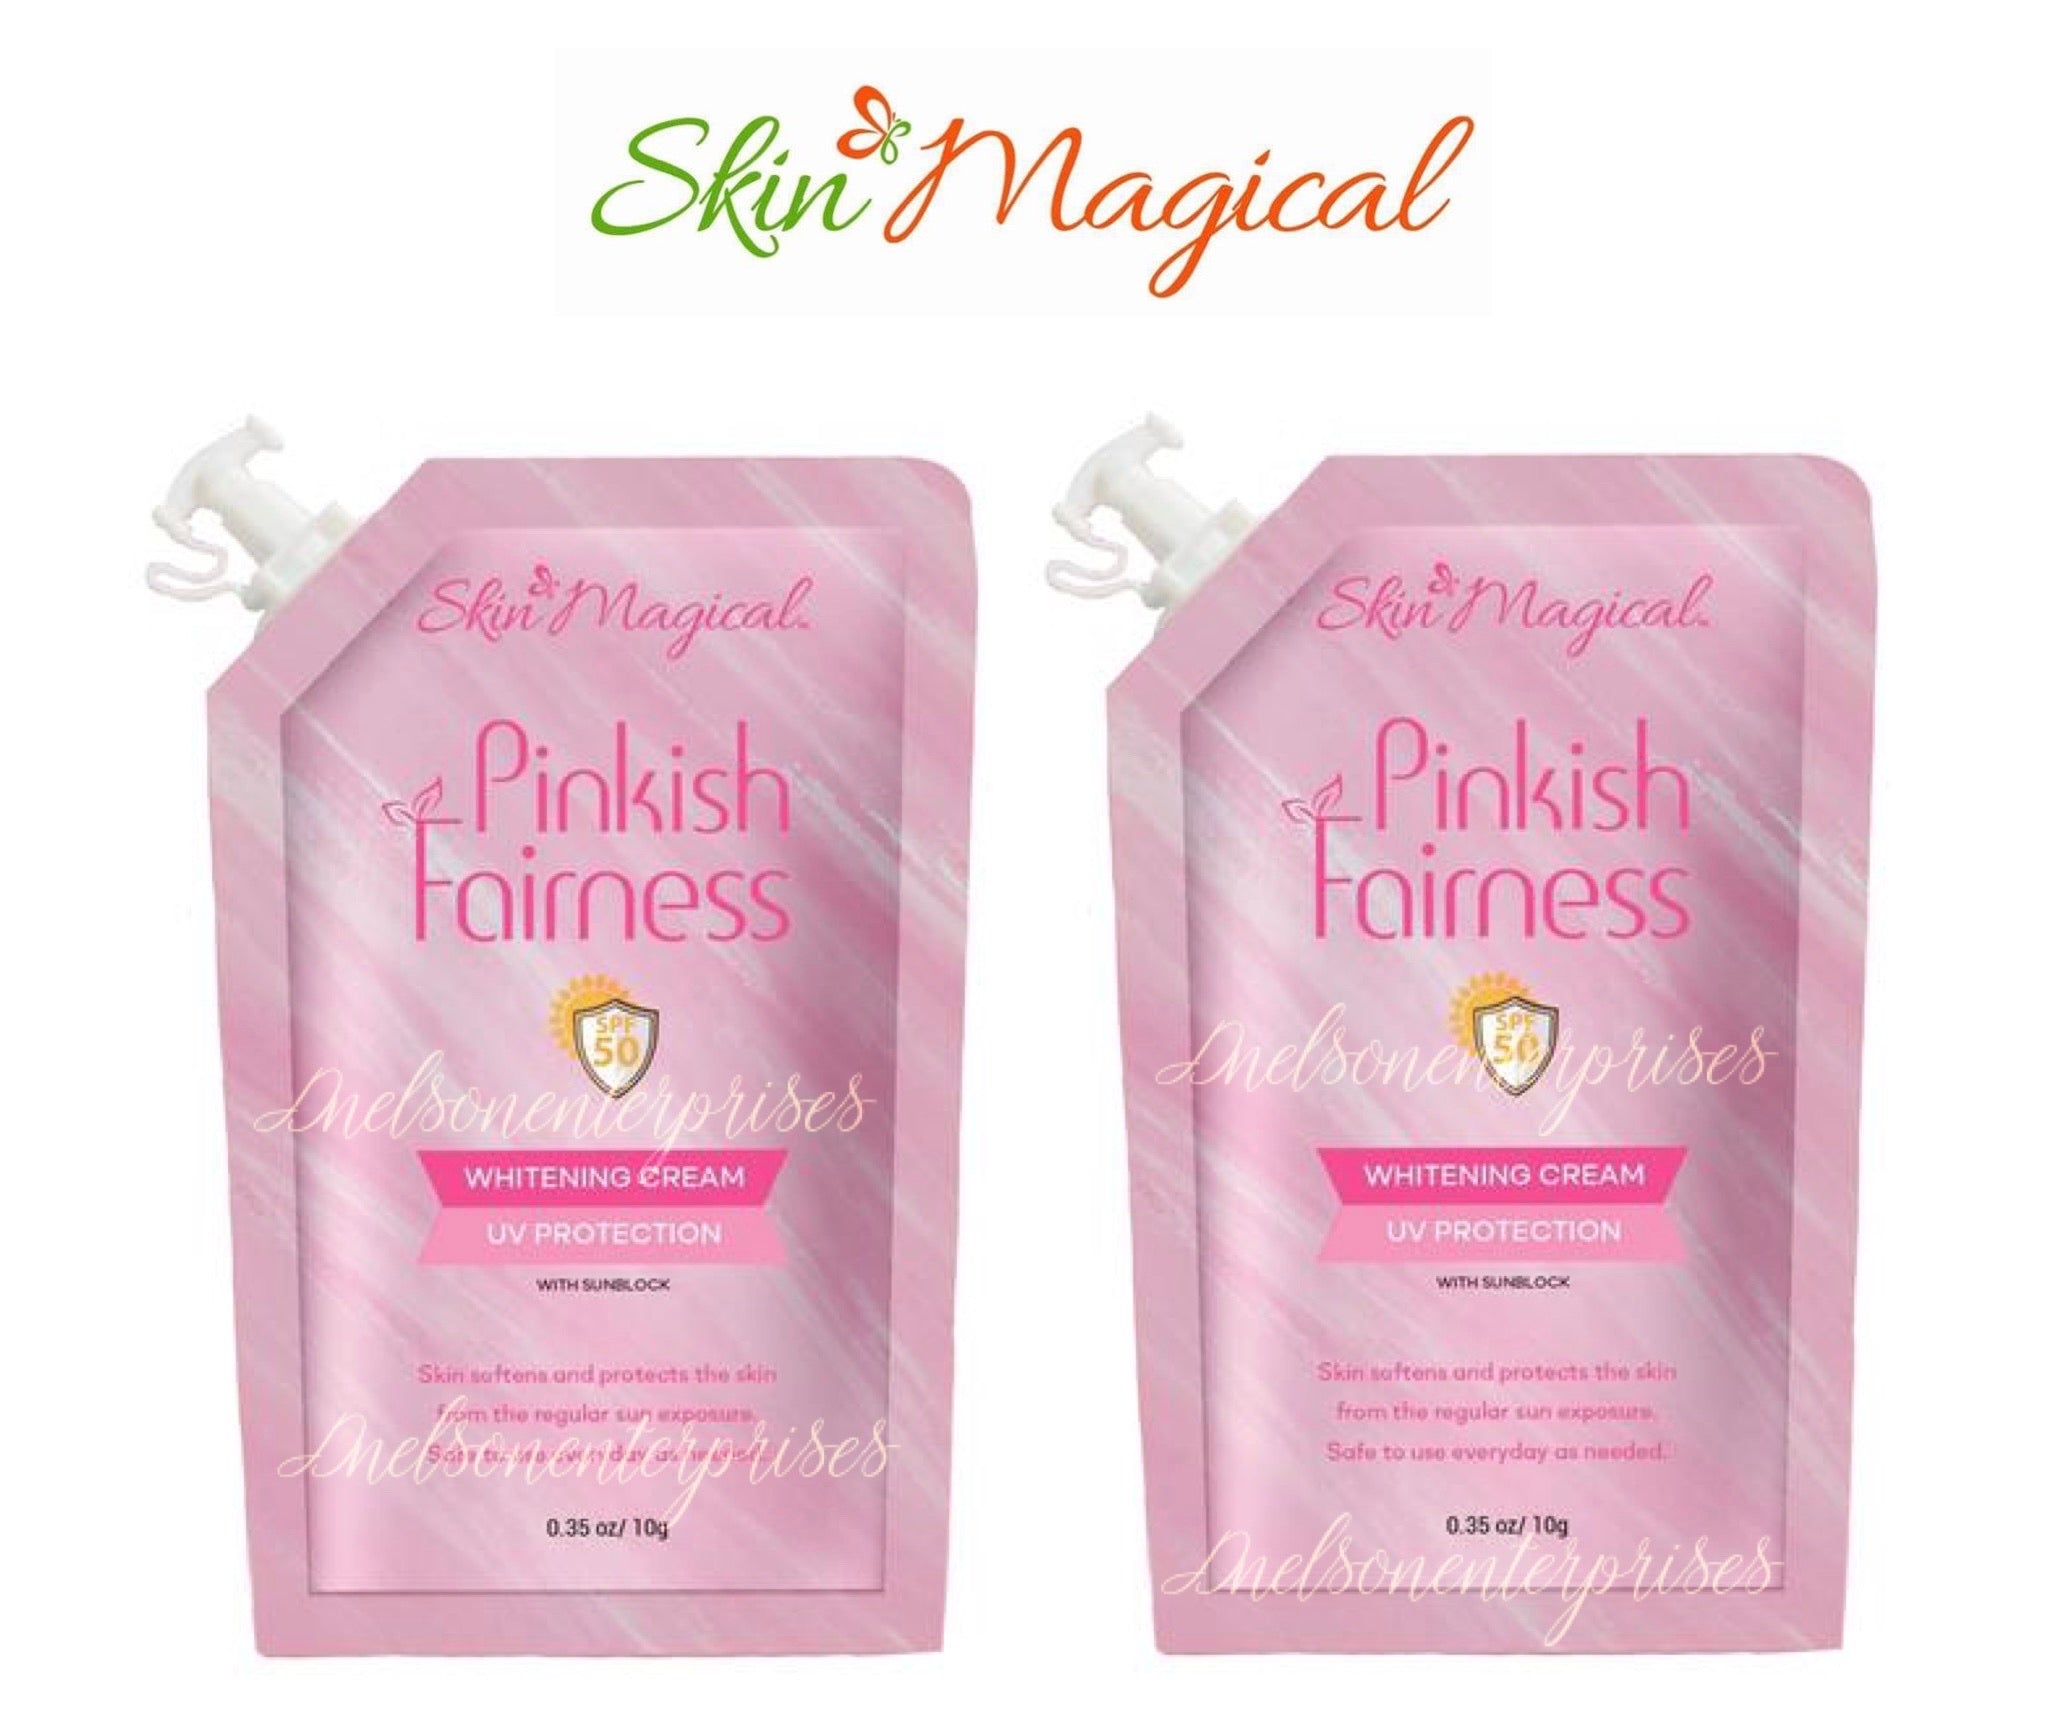 2pc Skin Magical Pinkish Fairness Cream UV Protection - 10g Each